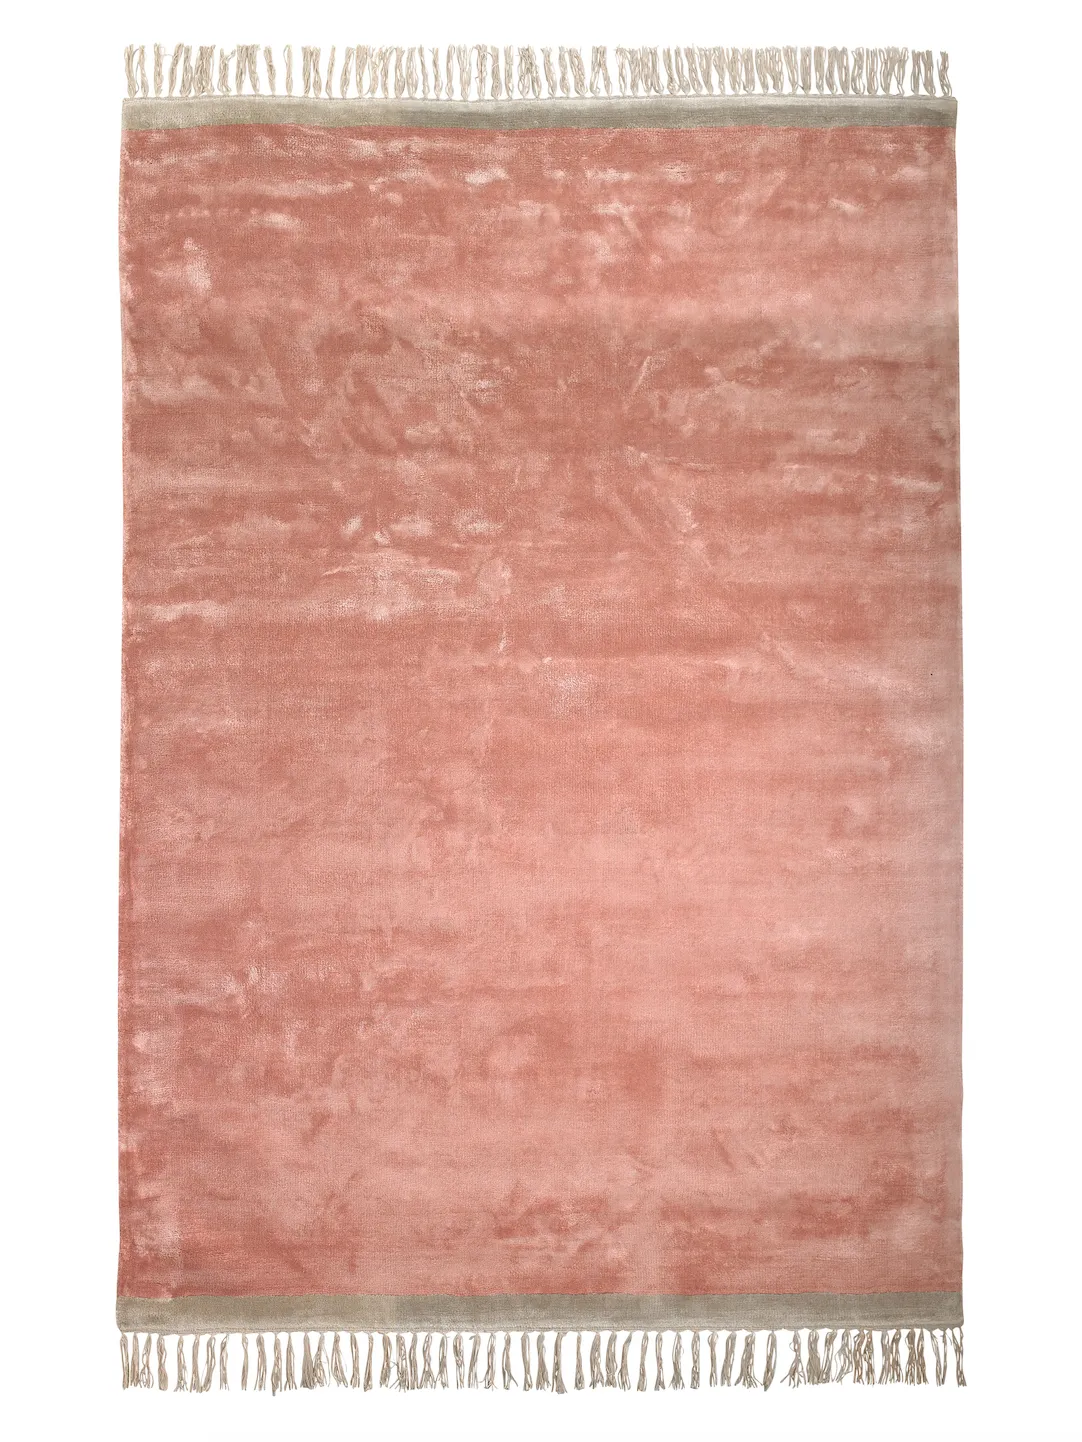 Monaco rug in Rosy, from £189, Sofa.com